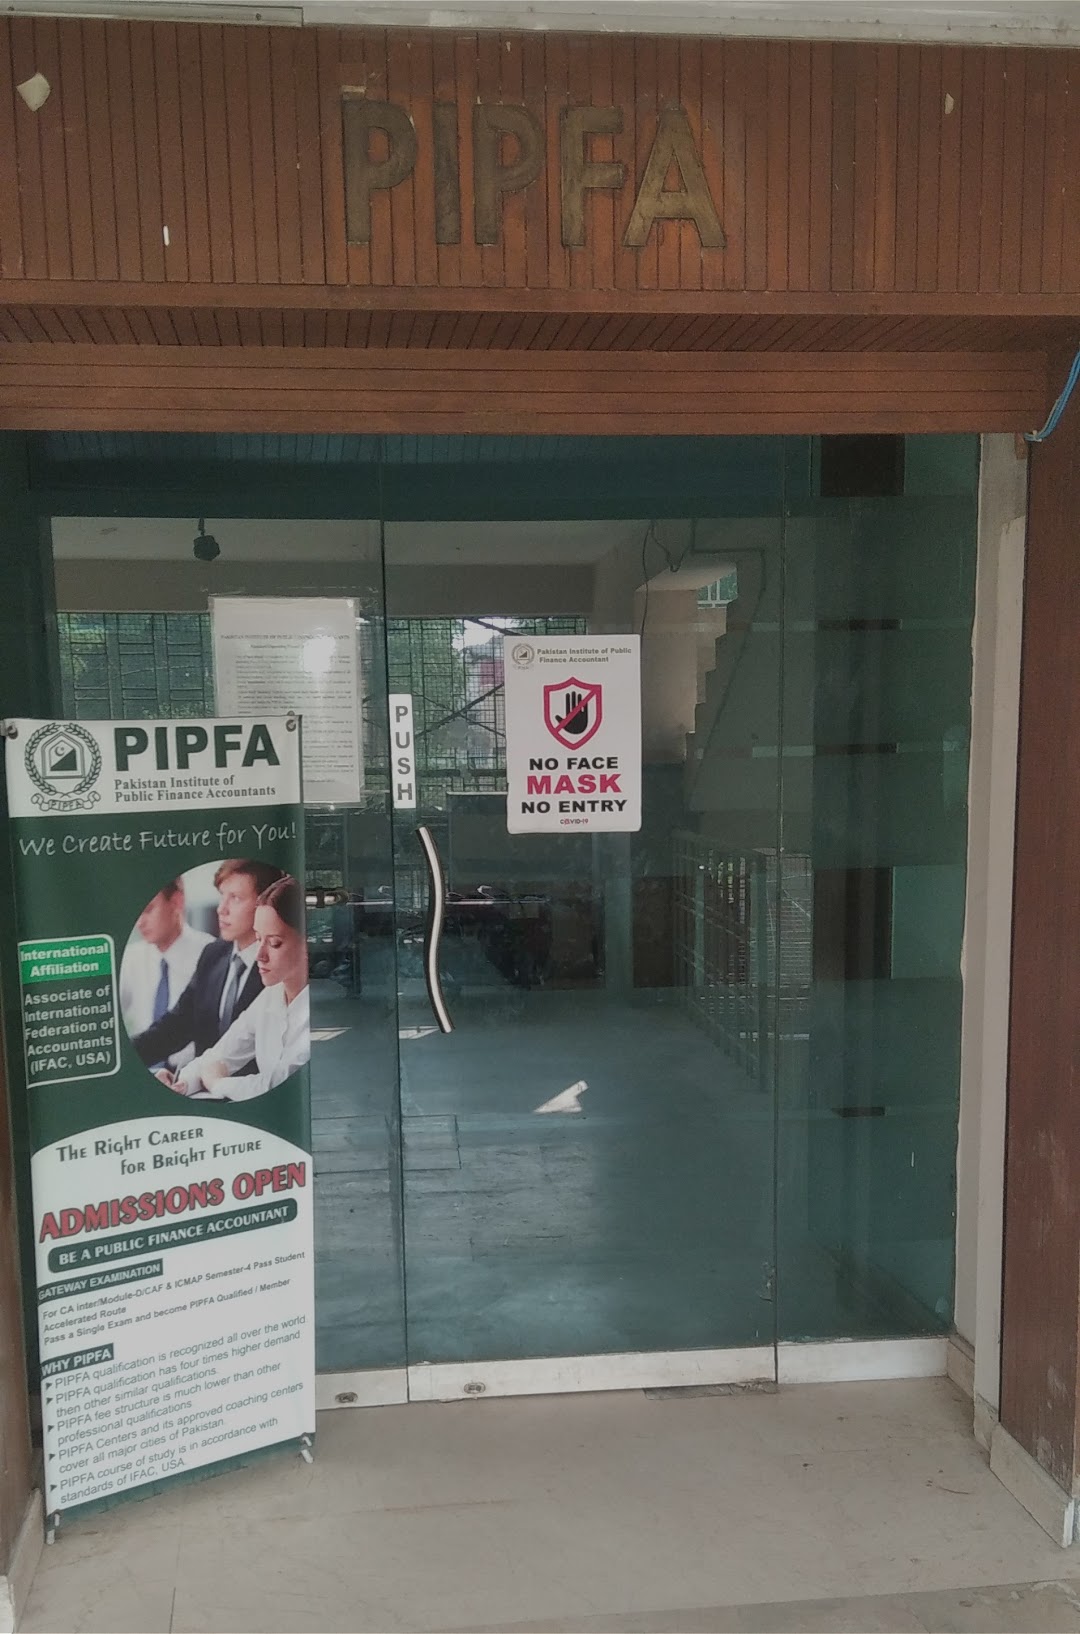 Pakistan Institute of Public Finance Accountants (PIPFA)